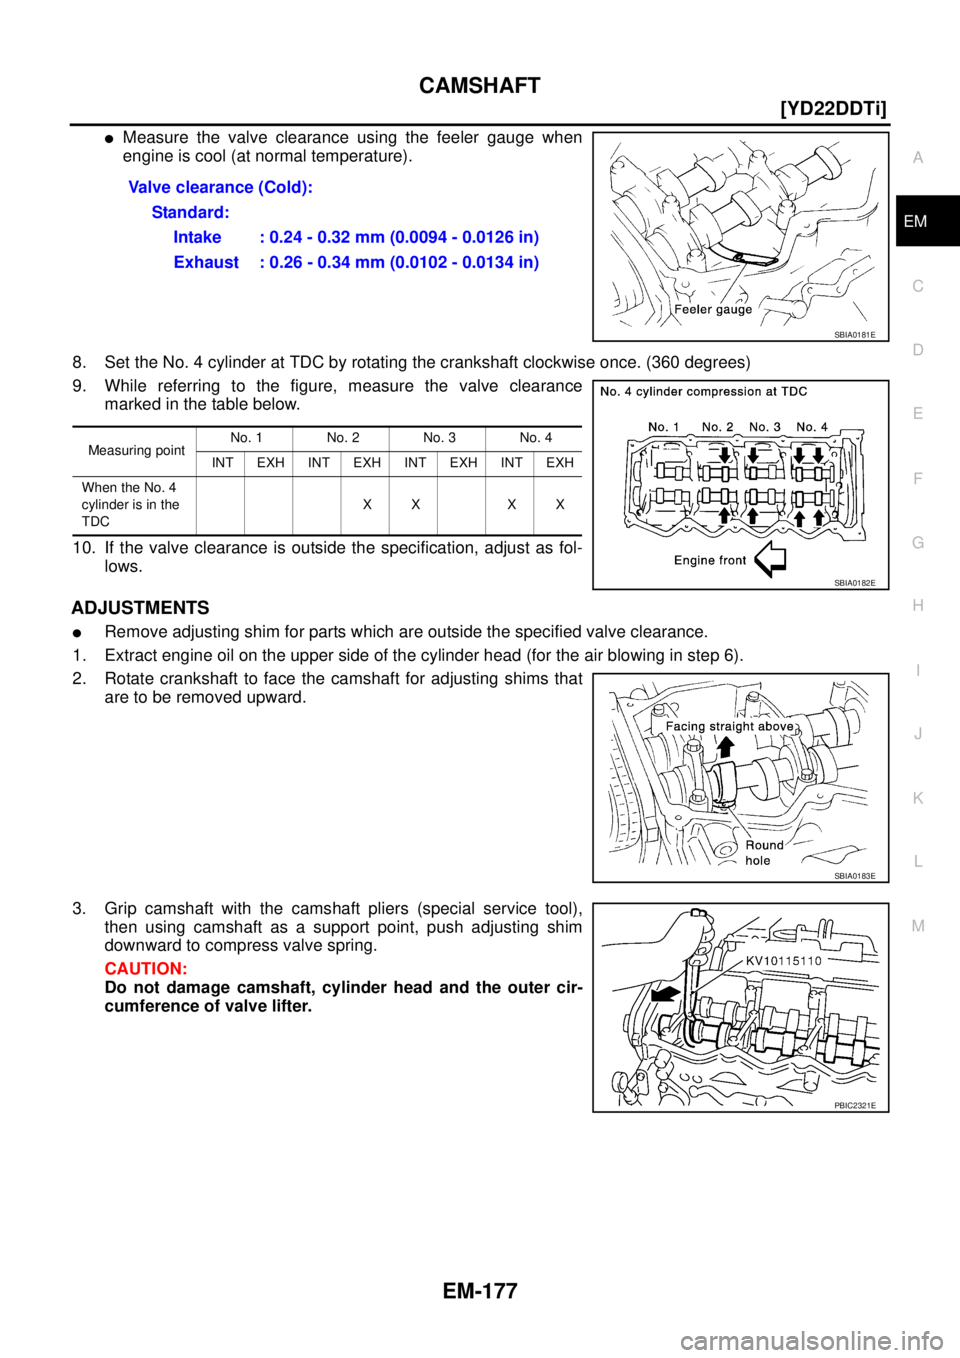 NISSAN X-TRAIL 2003  Service Repair Manual CAMSHAFT
EM-177
[YD22DDTi]
C
D
E
F
G
H
I
J
K
L
MA
EM
 
Measure the valve clearance using the feeler gauge when
engine is cool (at normal temperature).
8. Set the No. 4 cylinder at TDC by rotating the